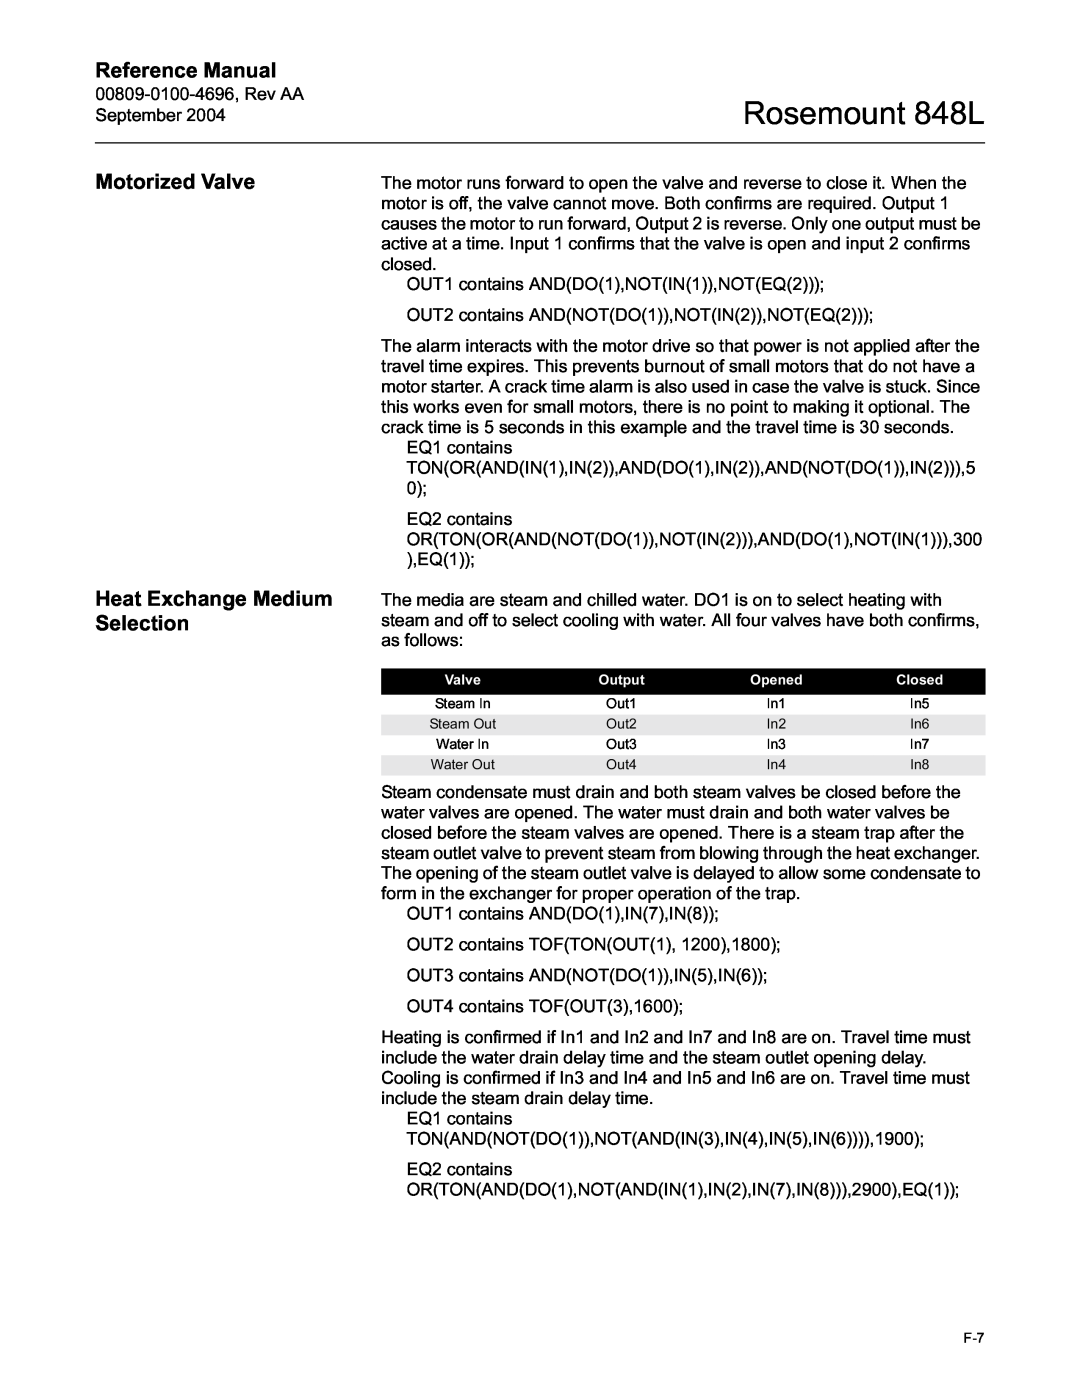 Emerson manual Motorized Valve Heat Exchange Medium Selection, Rosemount 848L, Reference Manual 